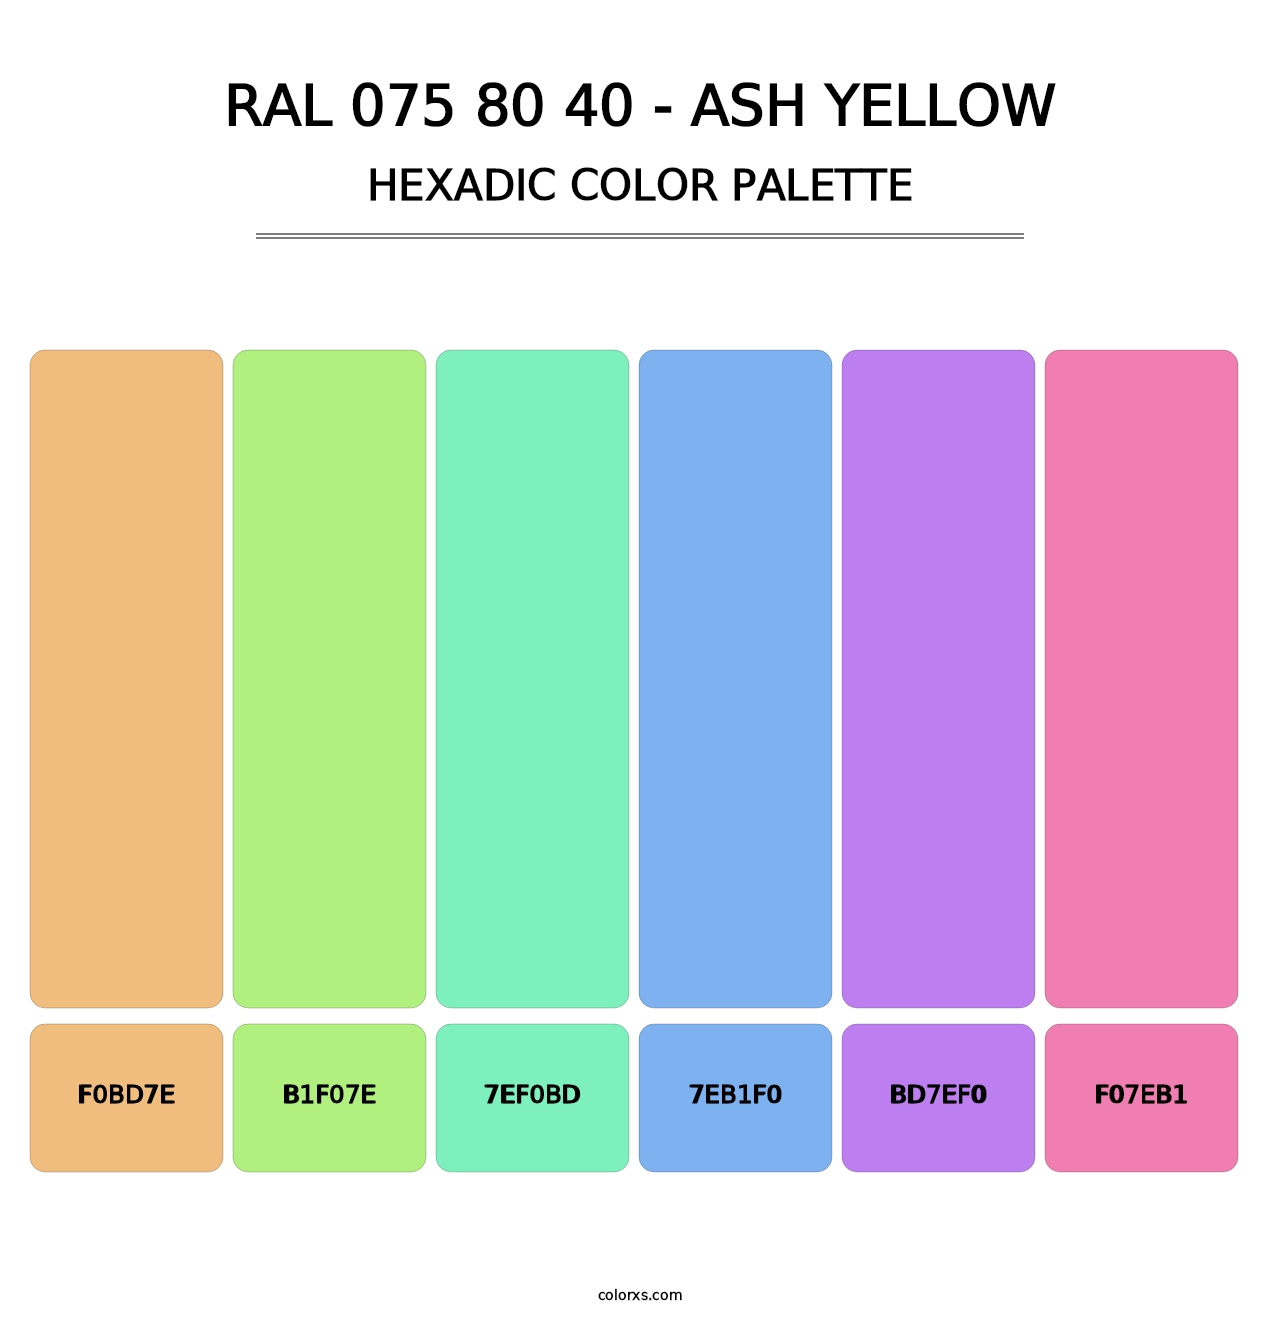 RAL 075 80 40 - Ash Yellow - Hexadic Color Palette